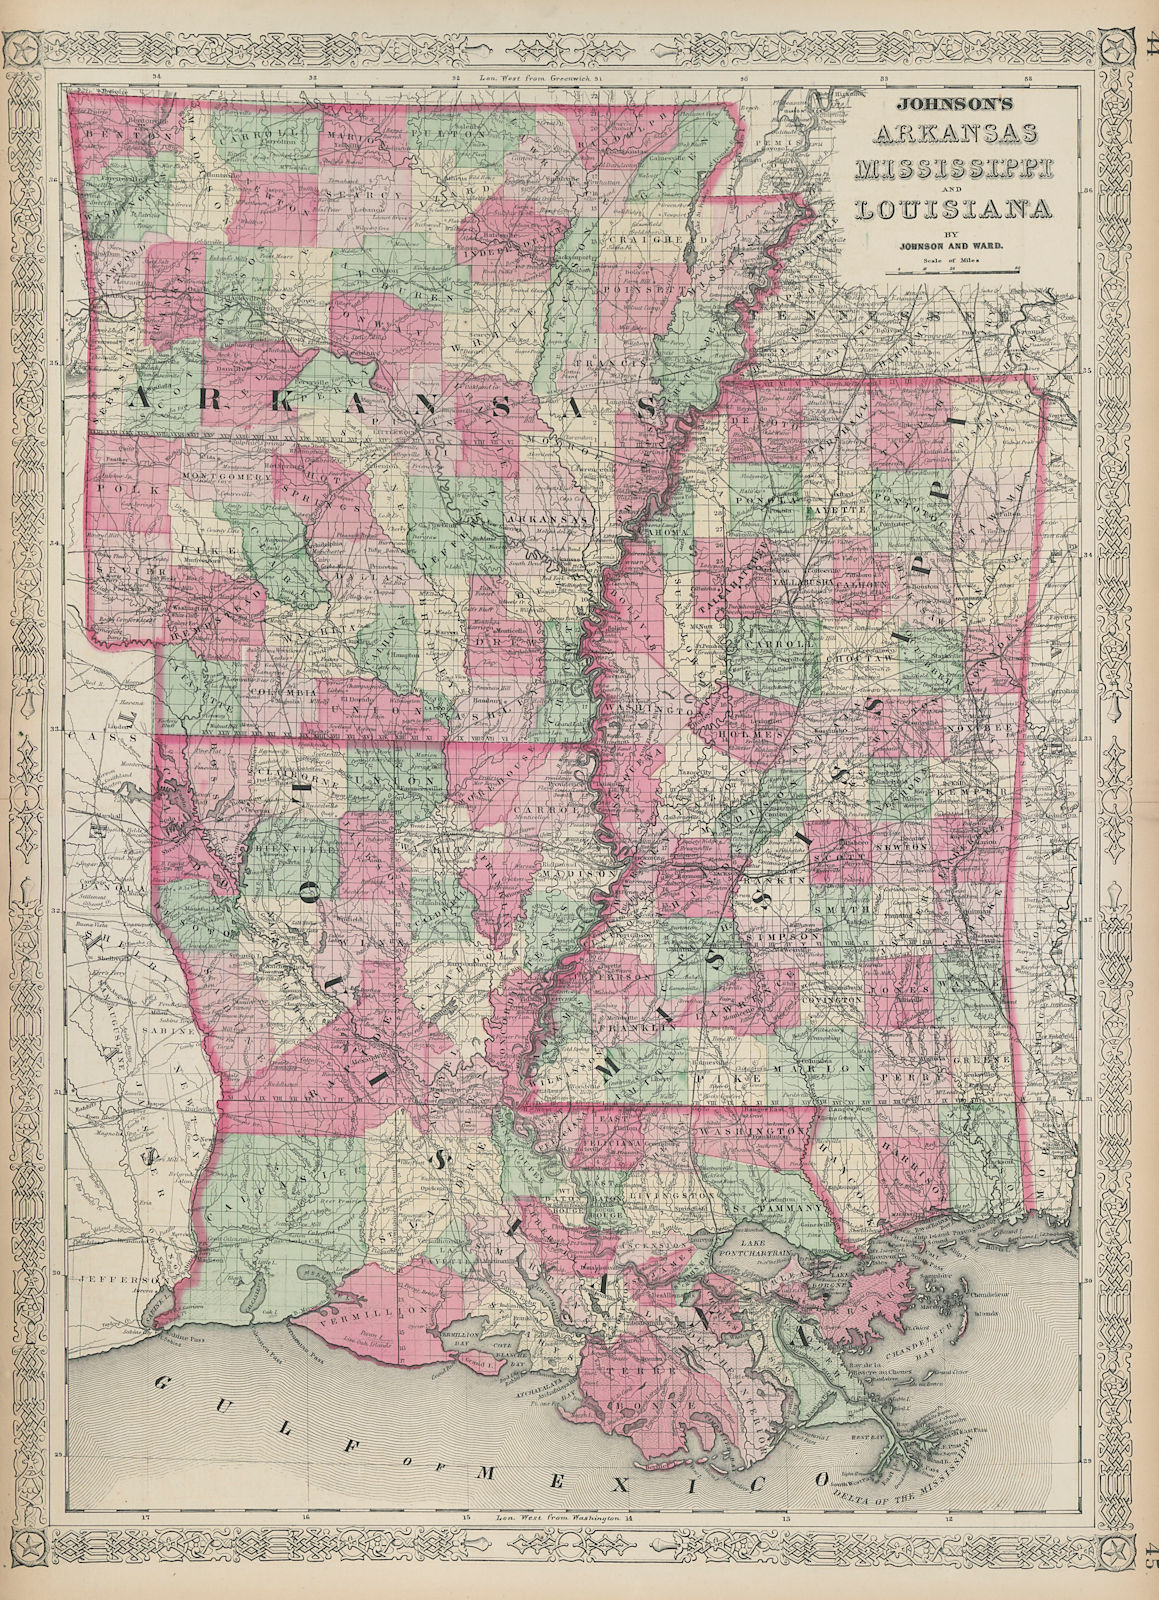 Johnson's Arkansas, Mississippi & Louisiana showing counties/parishes 1865 map